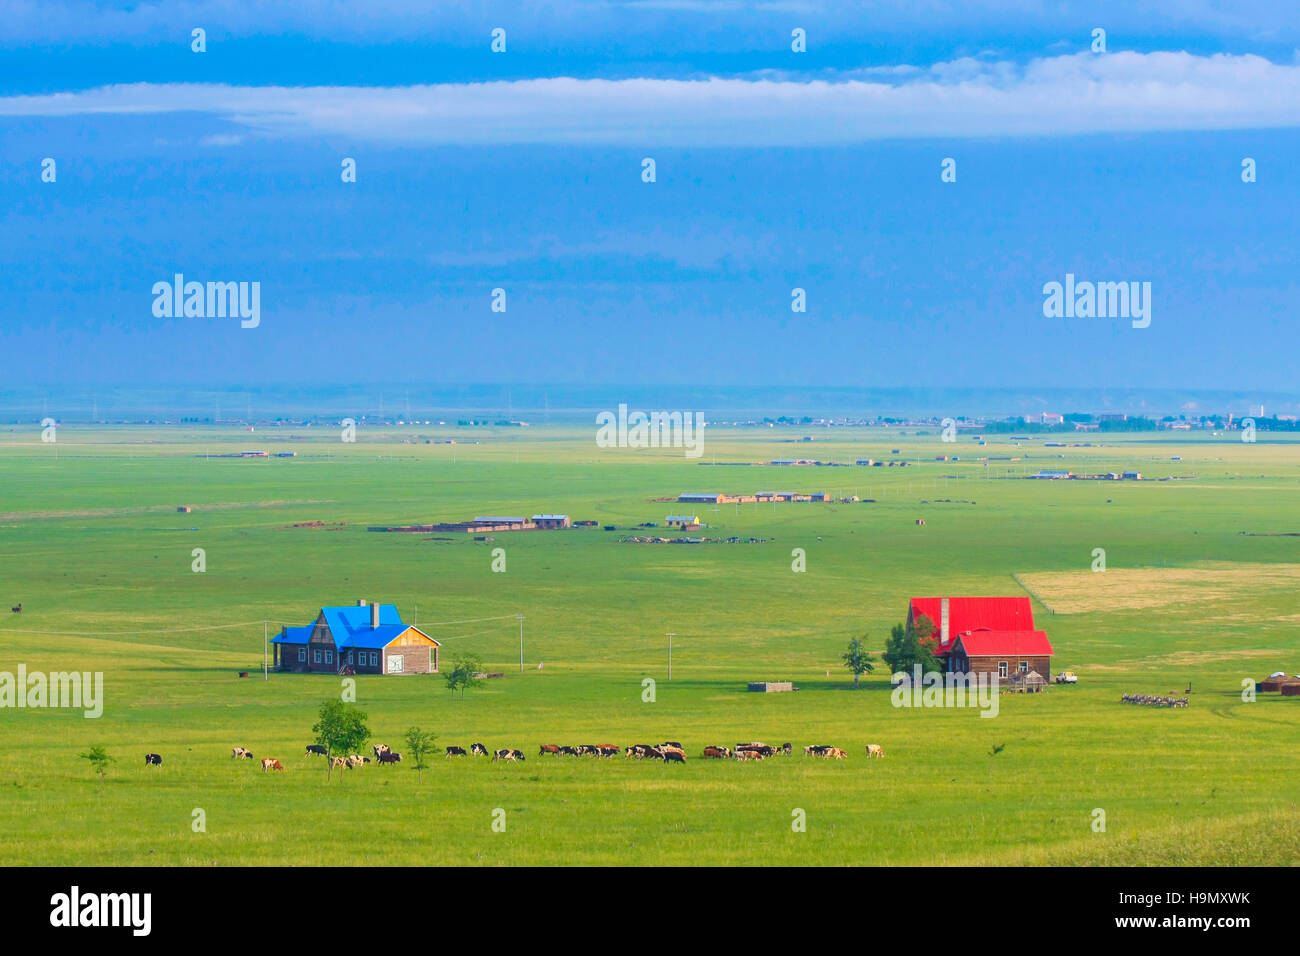 Mongolia Interna Hu Yan Bashuo Oboo Foto Stock